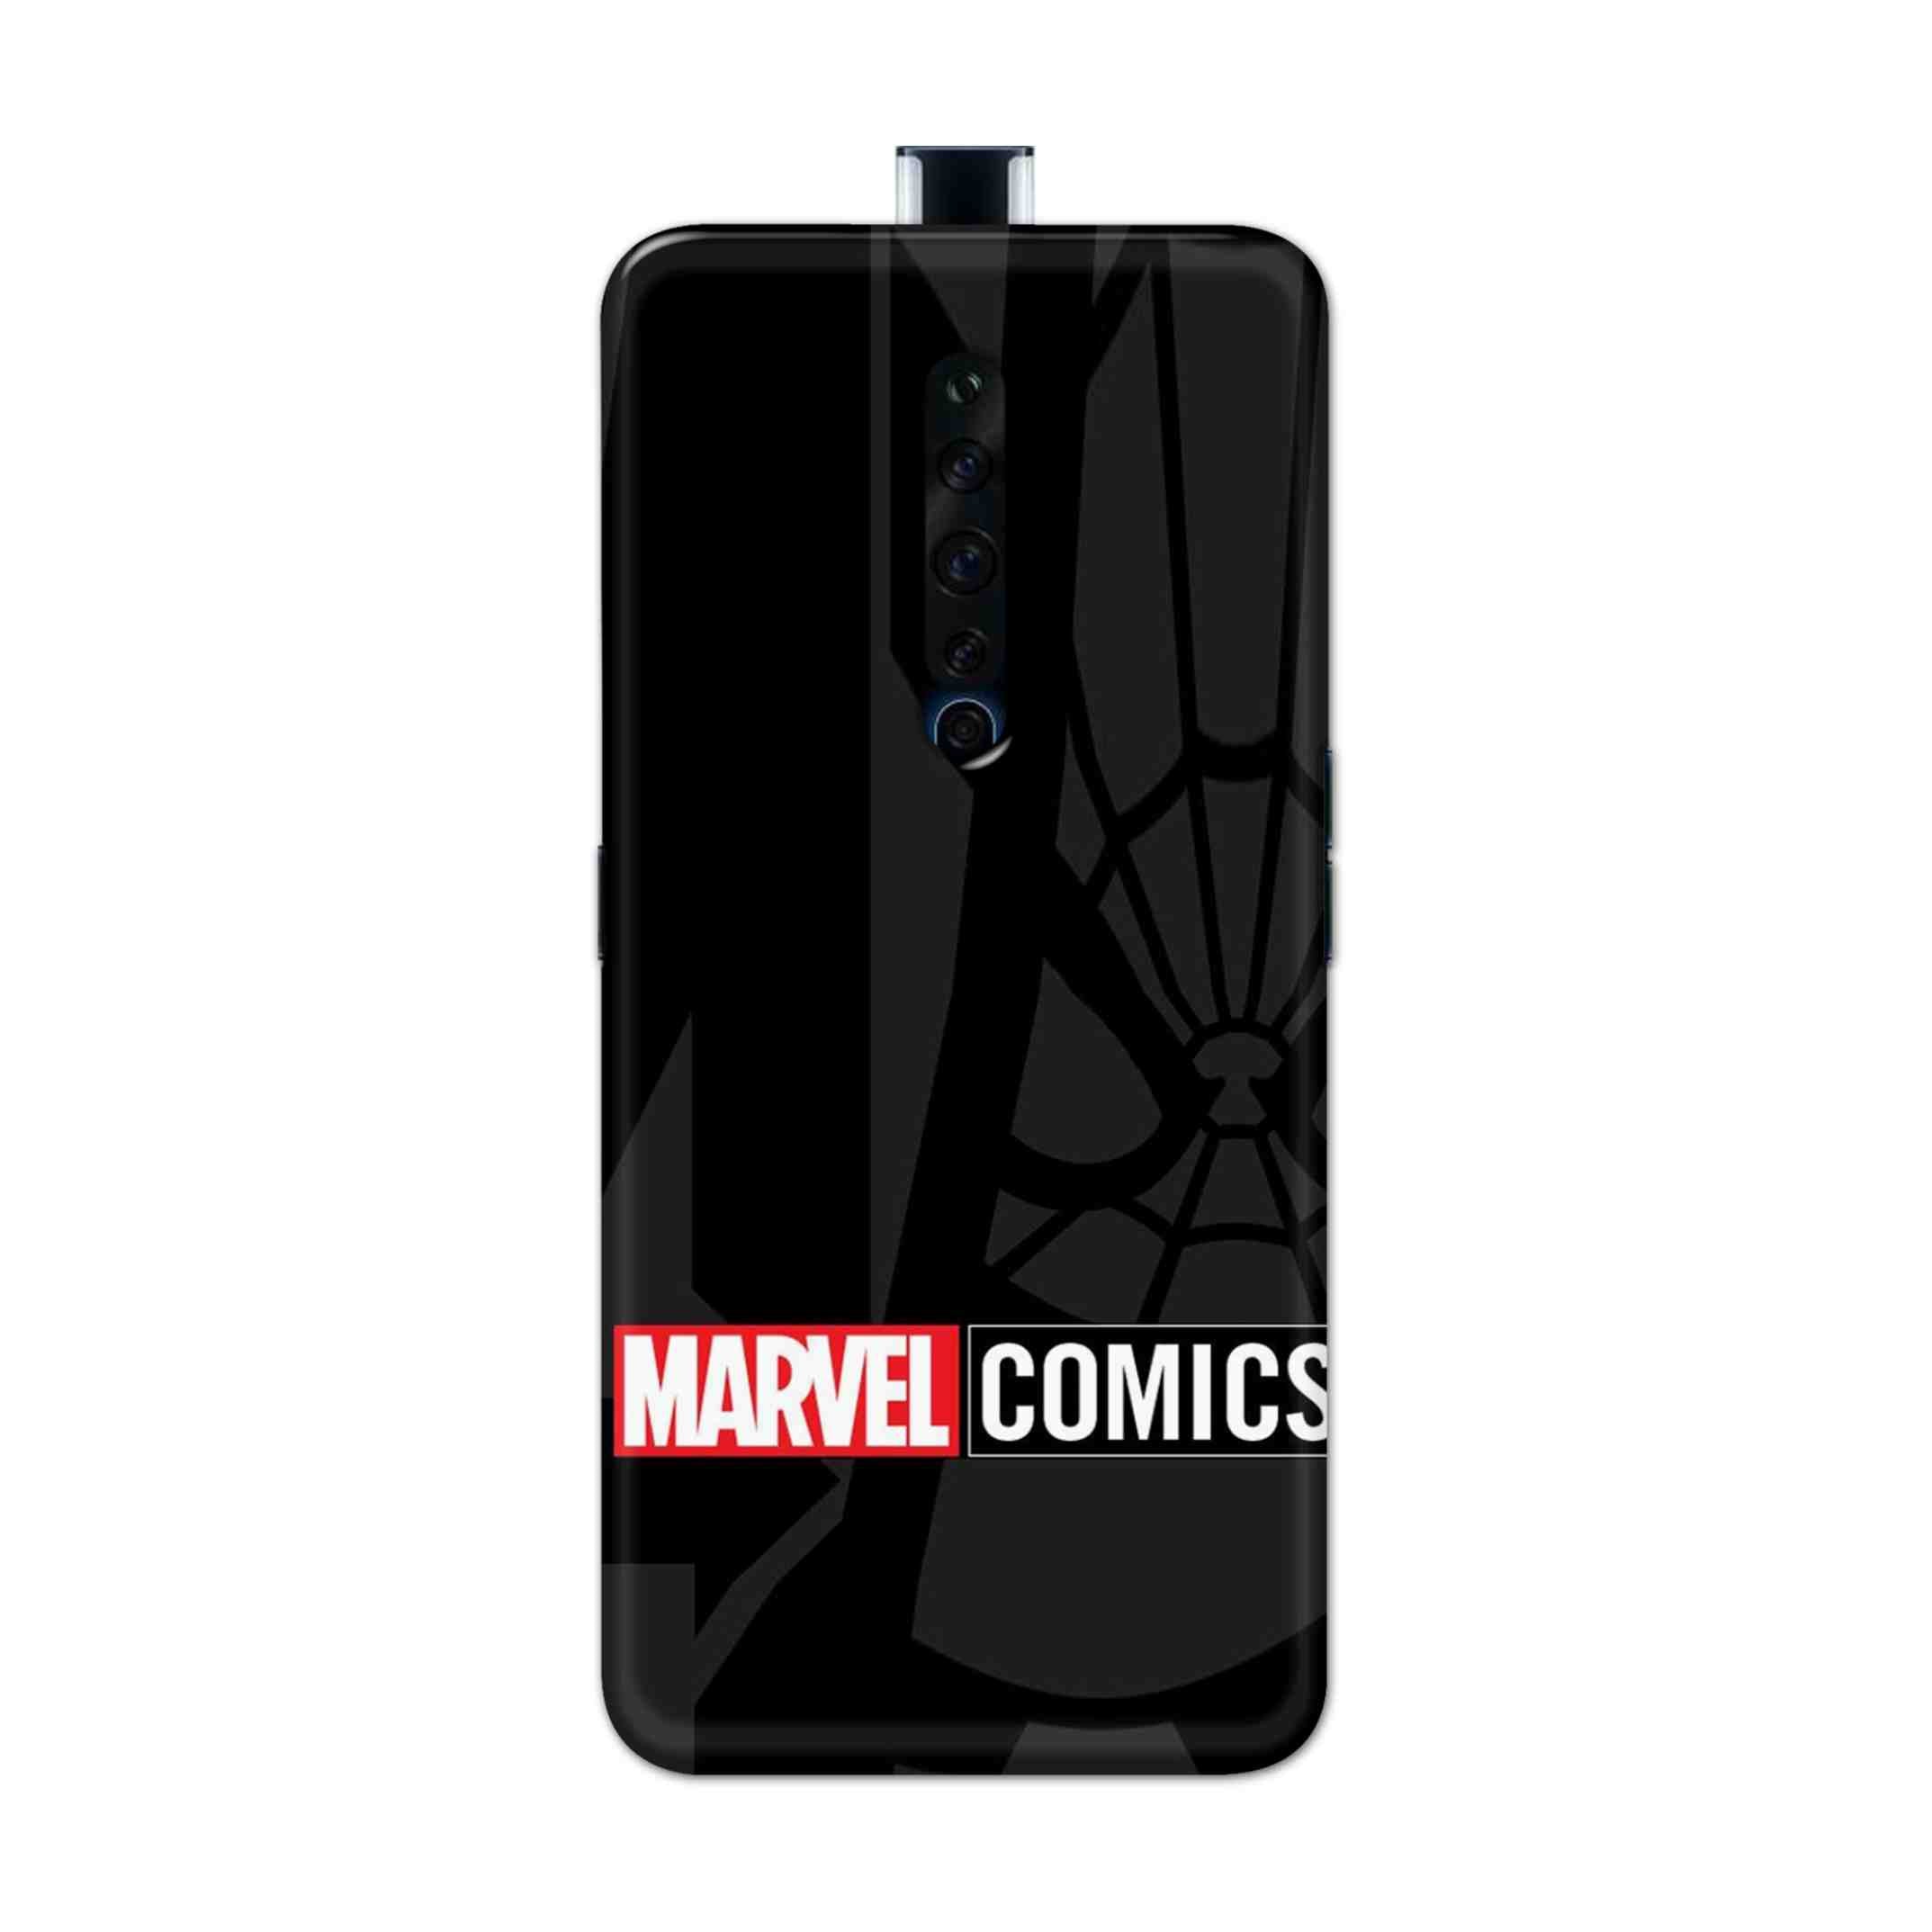 Buy Marvel Comics Hard Back Mobile Phone Case Cover For Oppo Reno 2Z Online